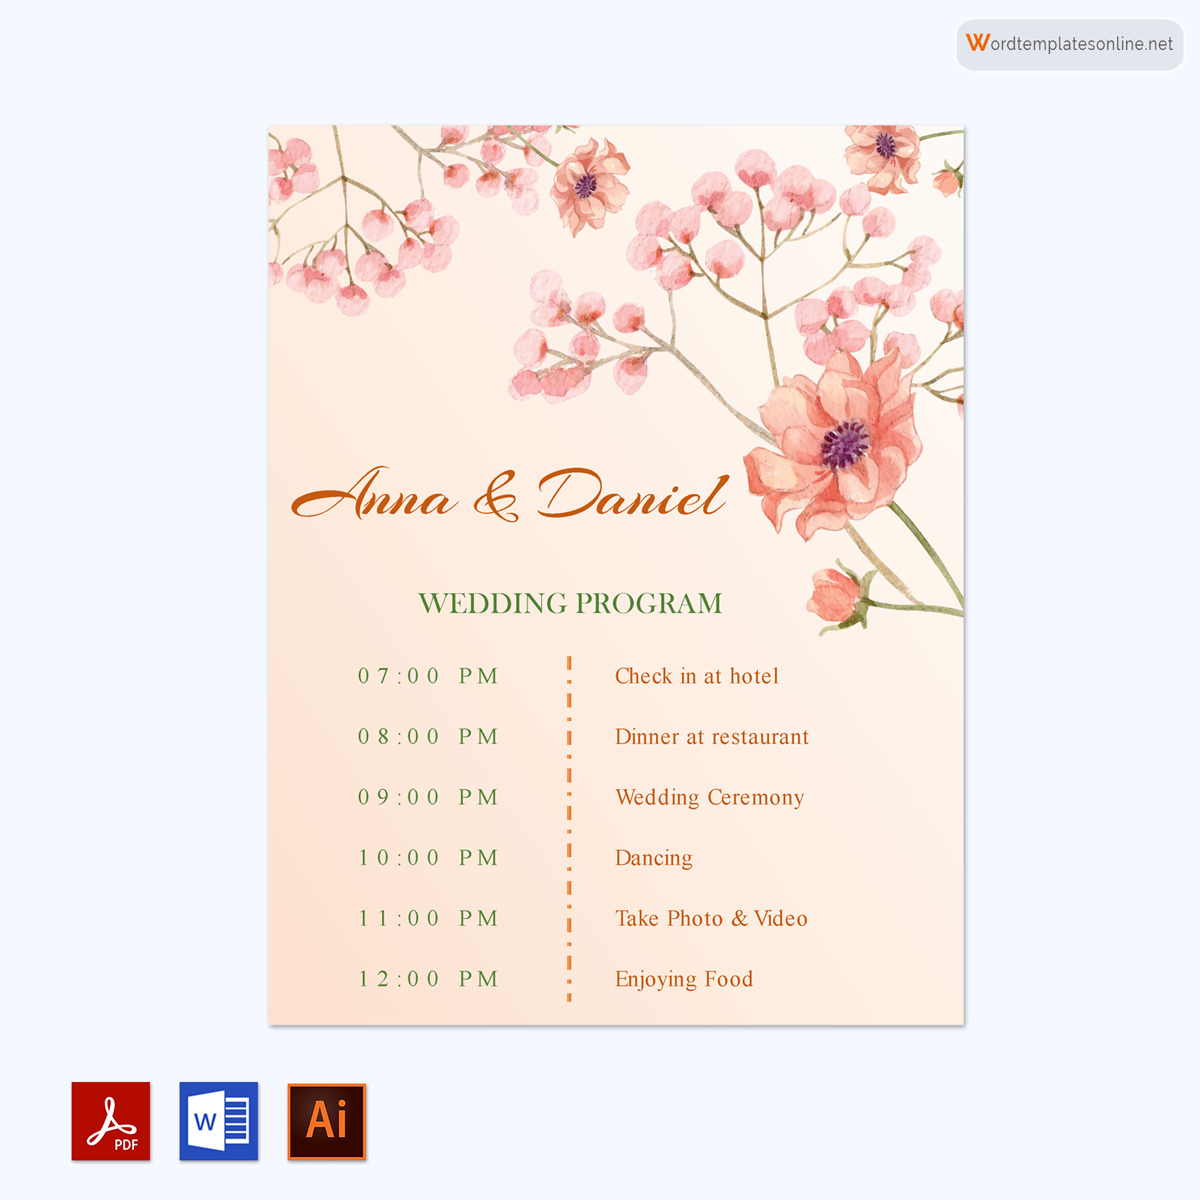 Church wedding program Examples